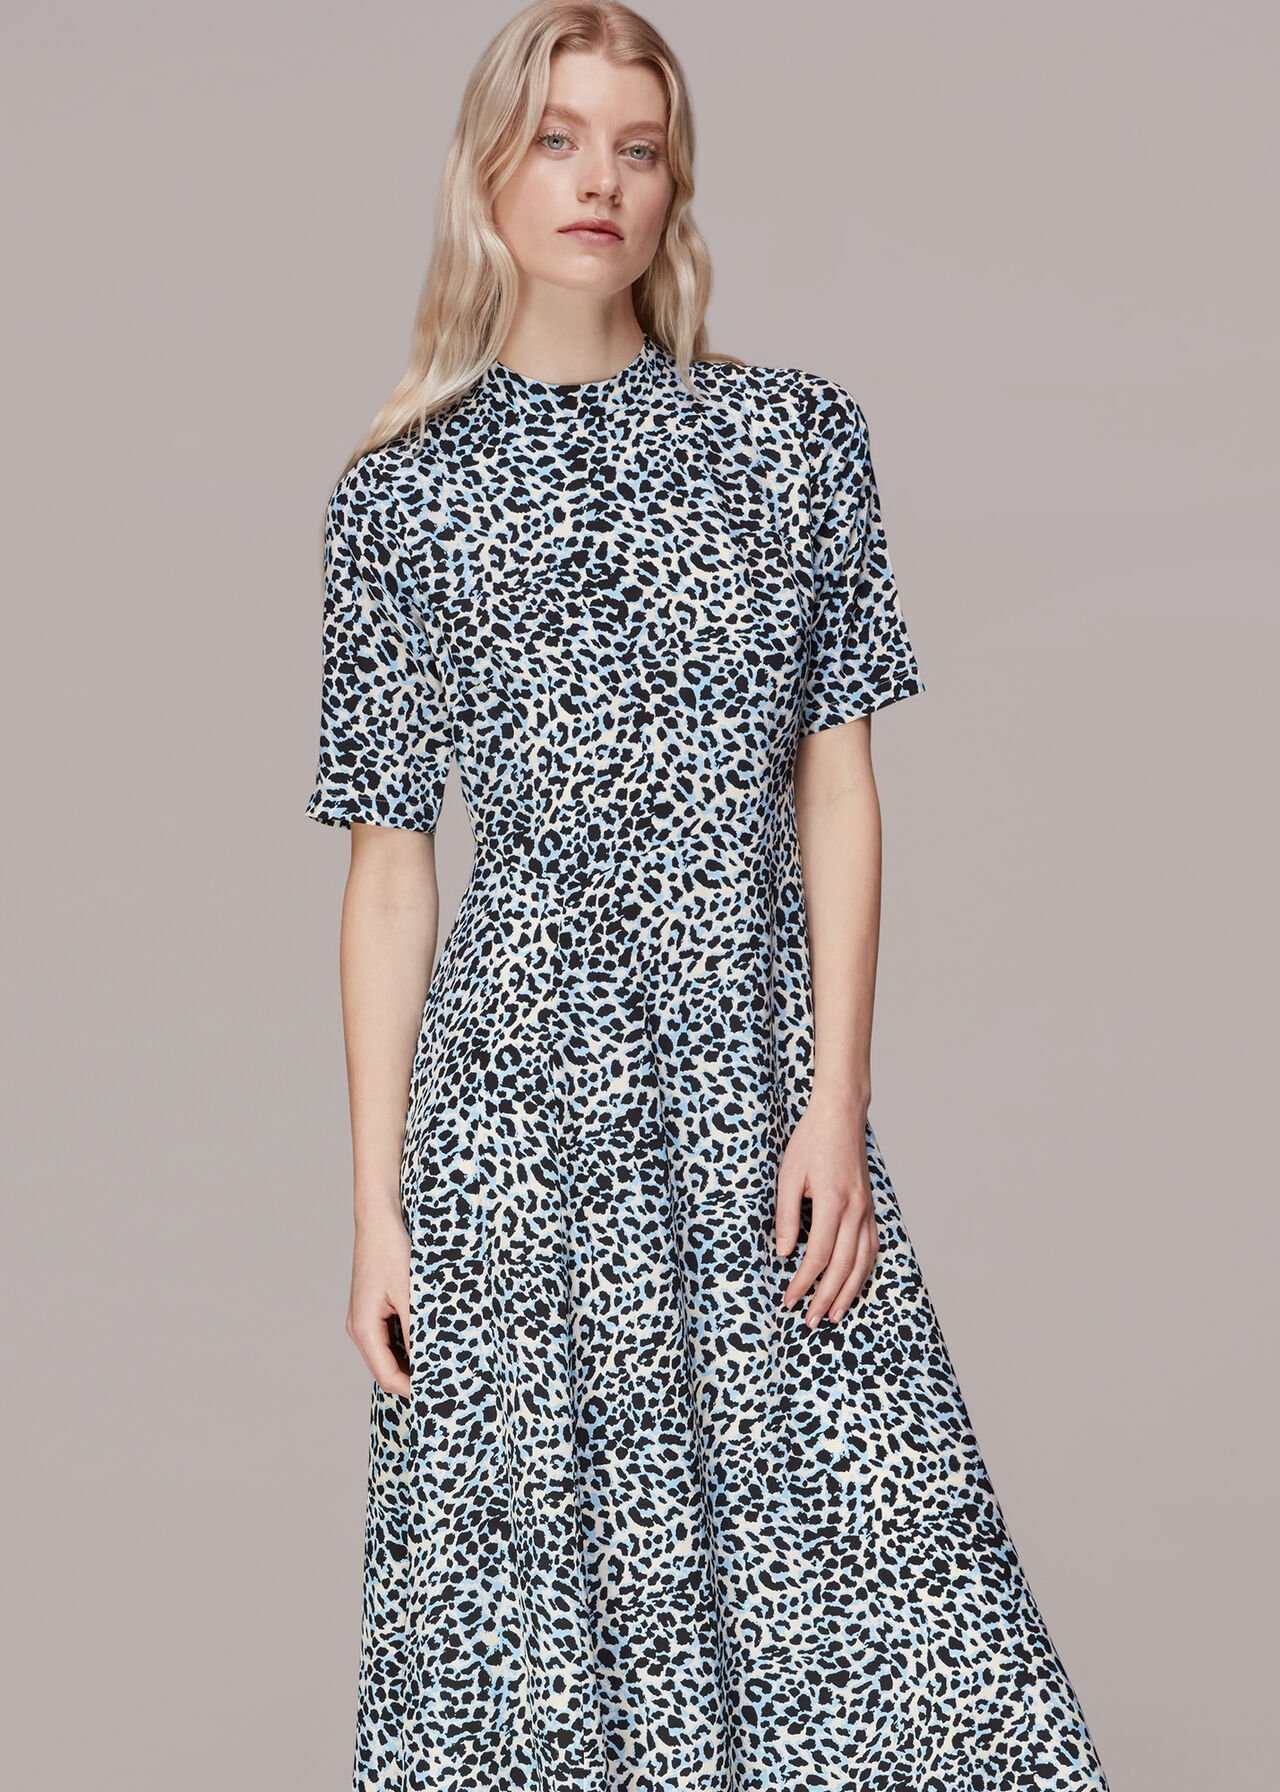 Abstract Cheetah Silk Dress